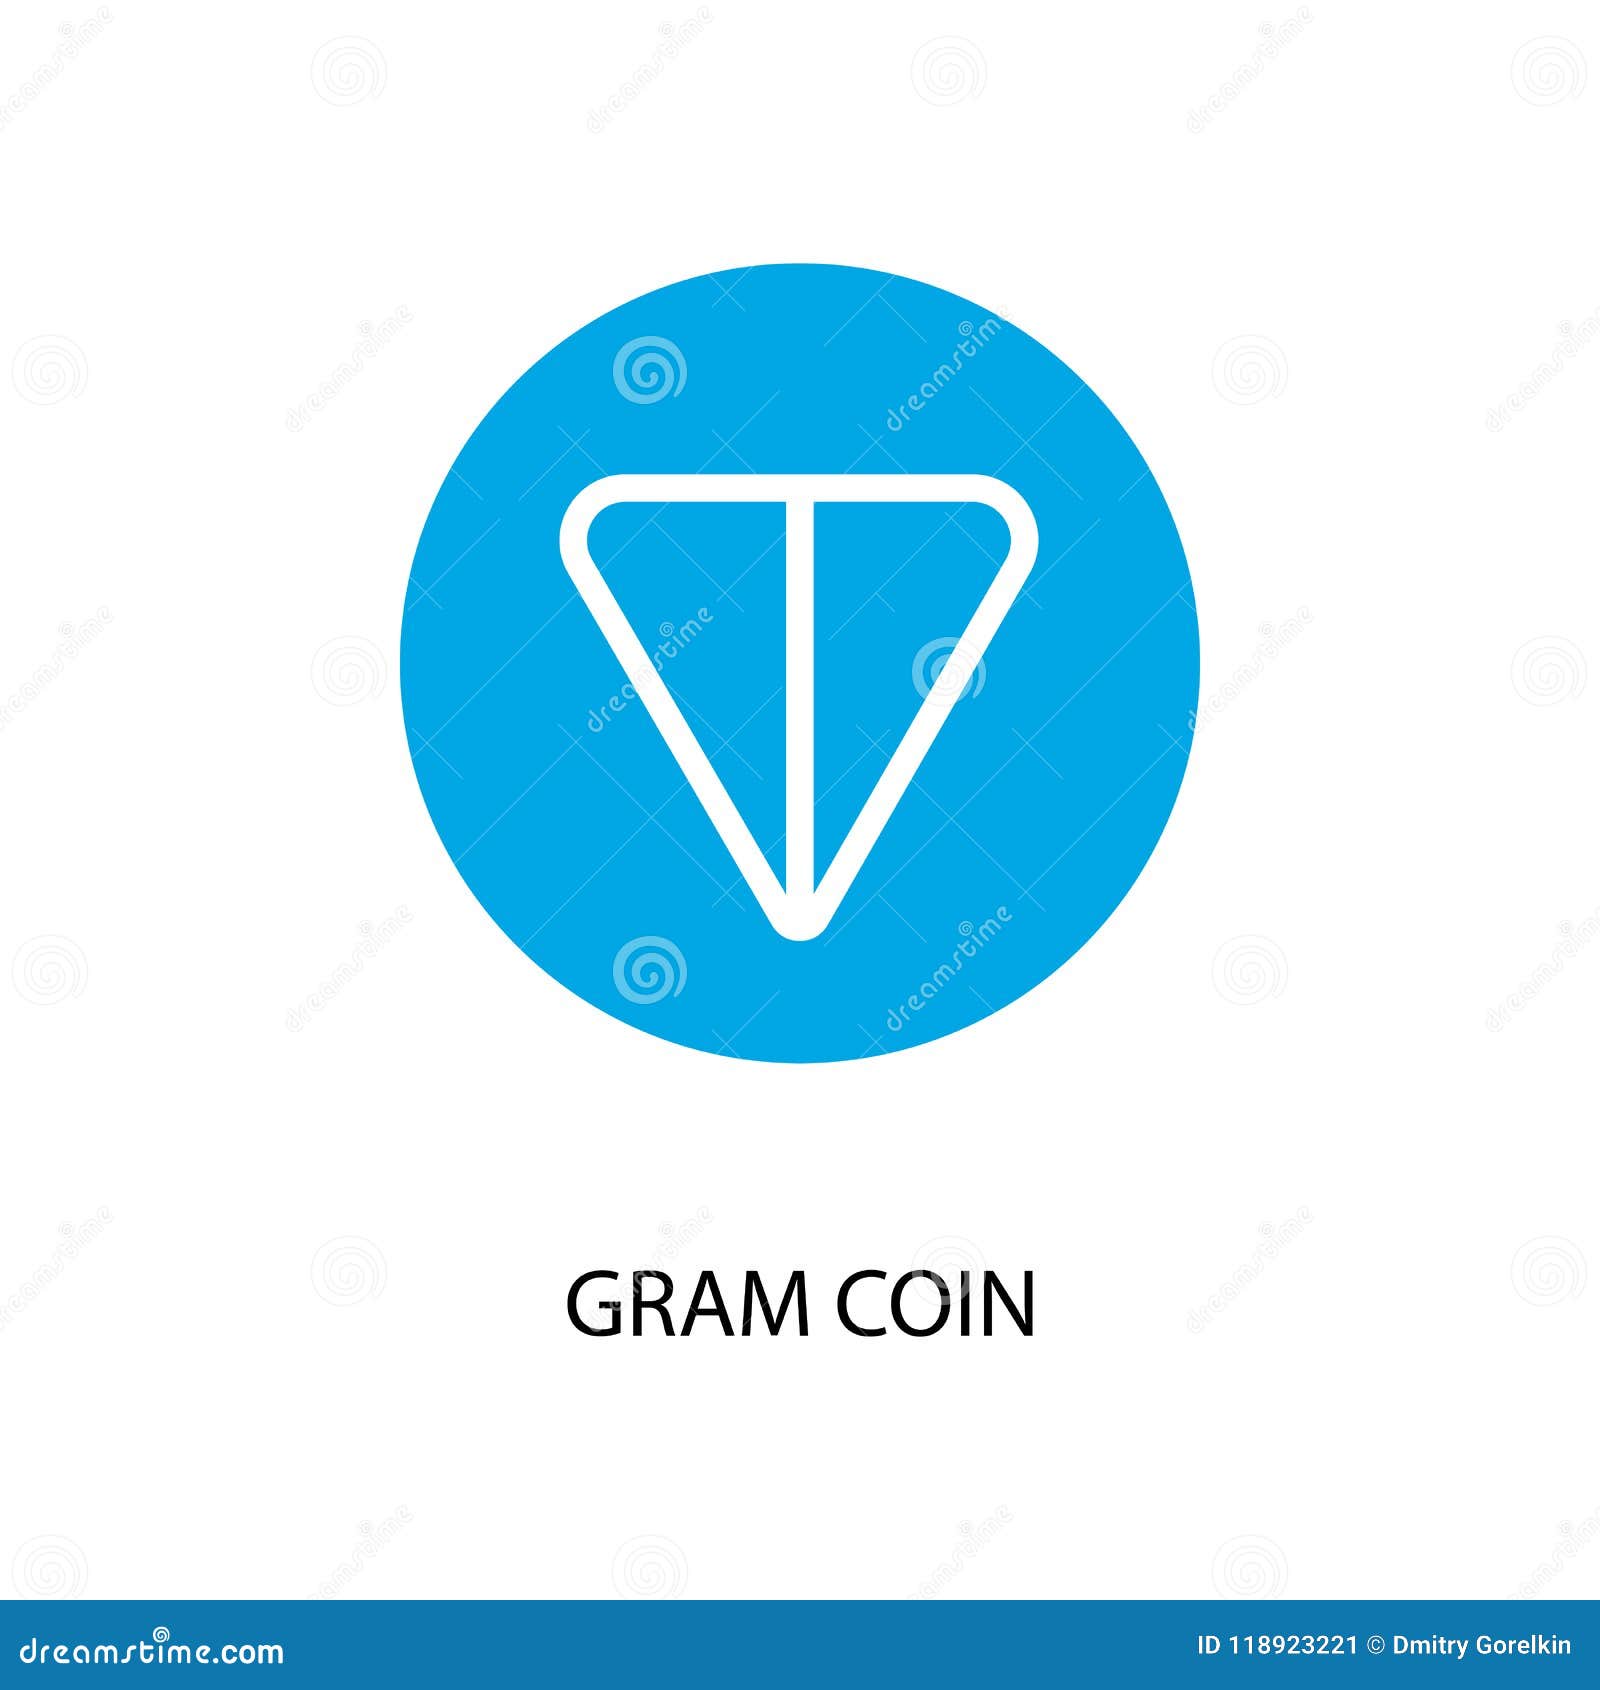 GRAM – Gram cryptocurrency by Telegram team – BitcoinWiki